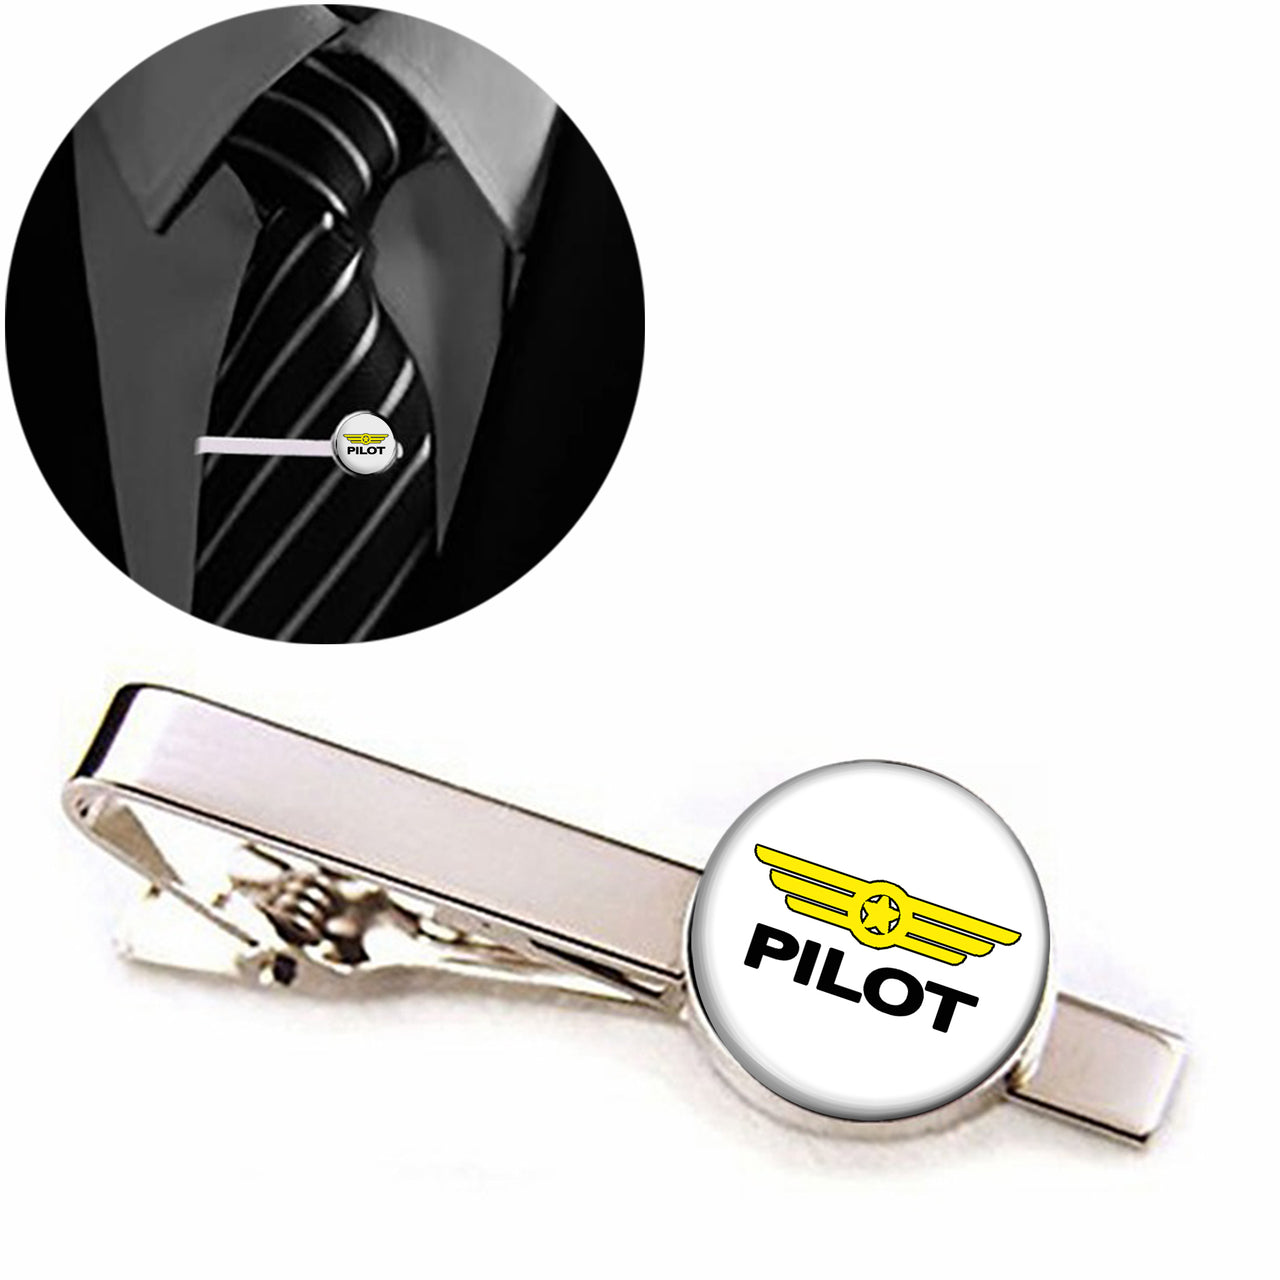 Pilot & Badge Designed Tie Clips